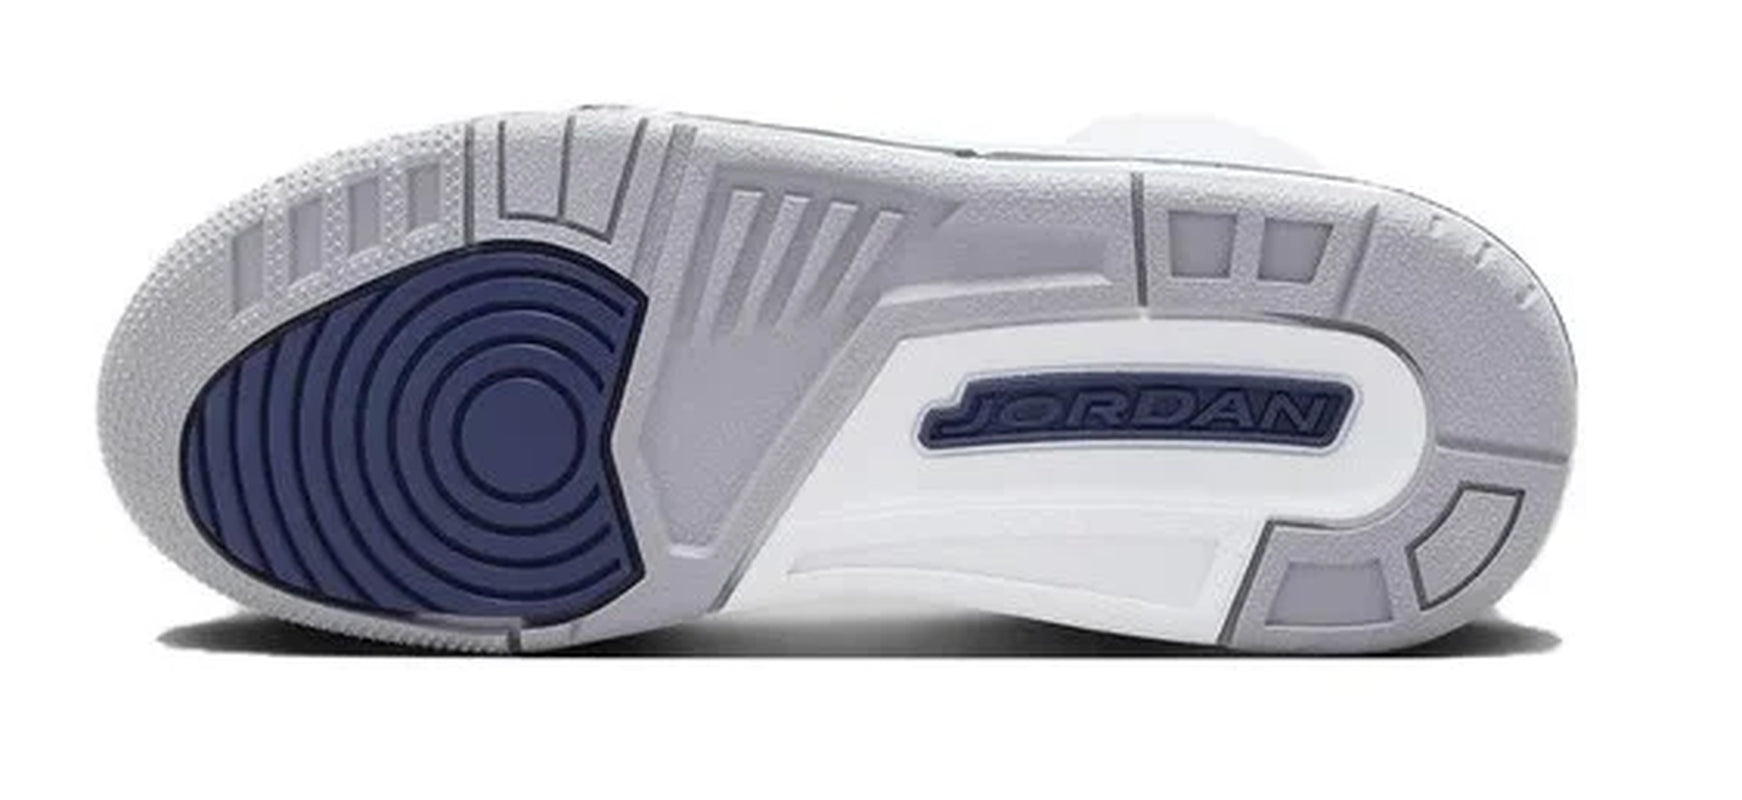 Big Kid's Air Jordan 3 Retro White/Midnight Navy Sneakers - Size 4